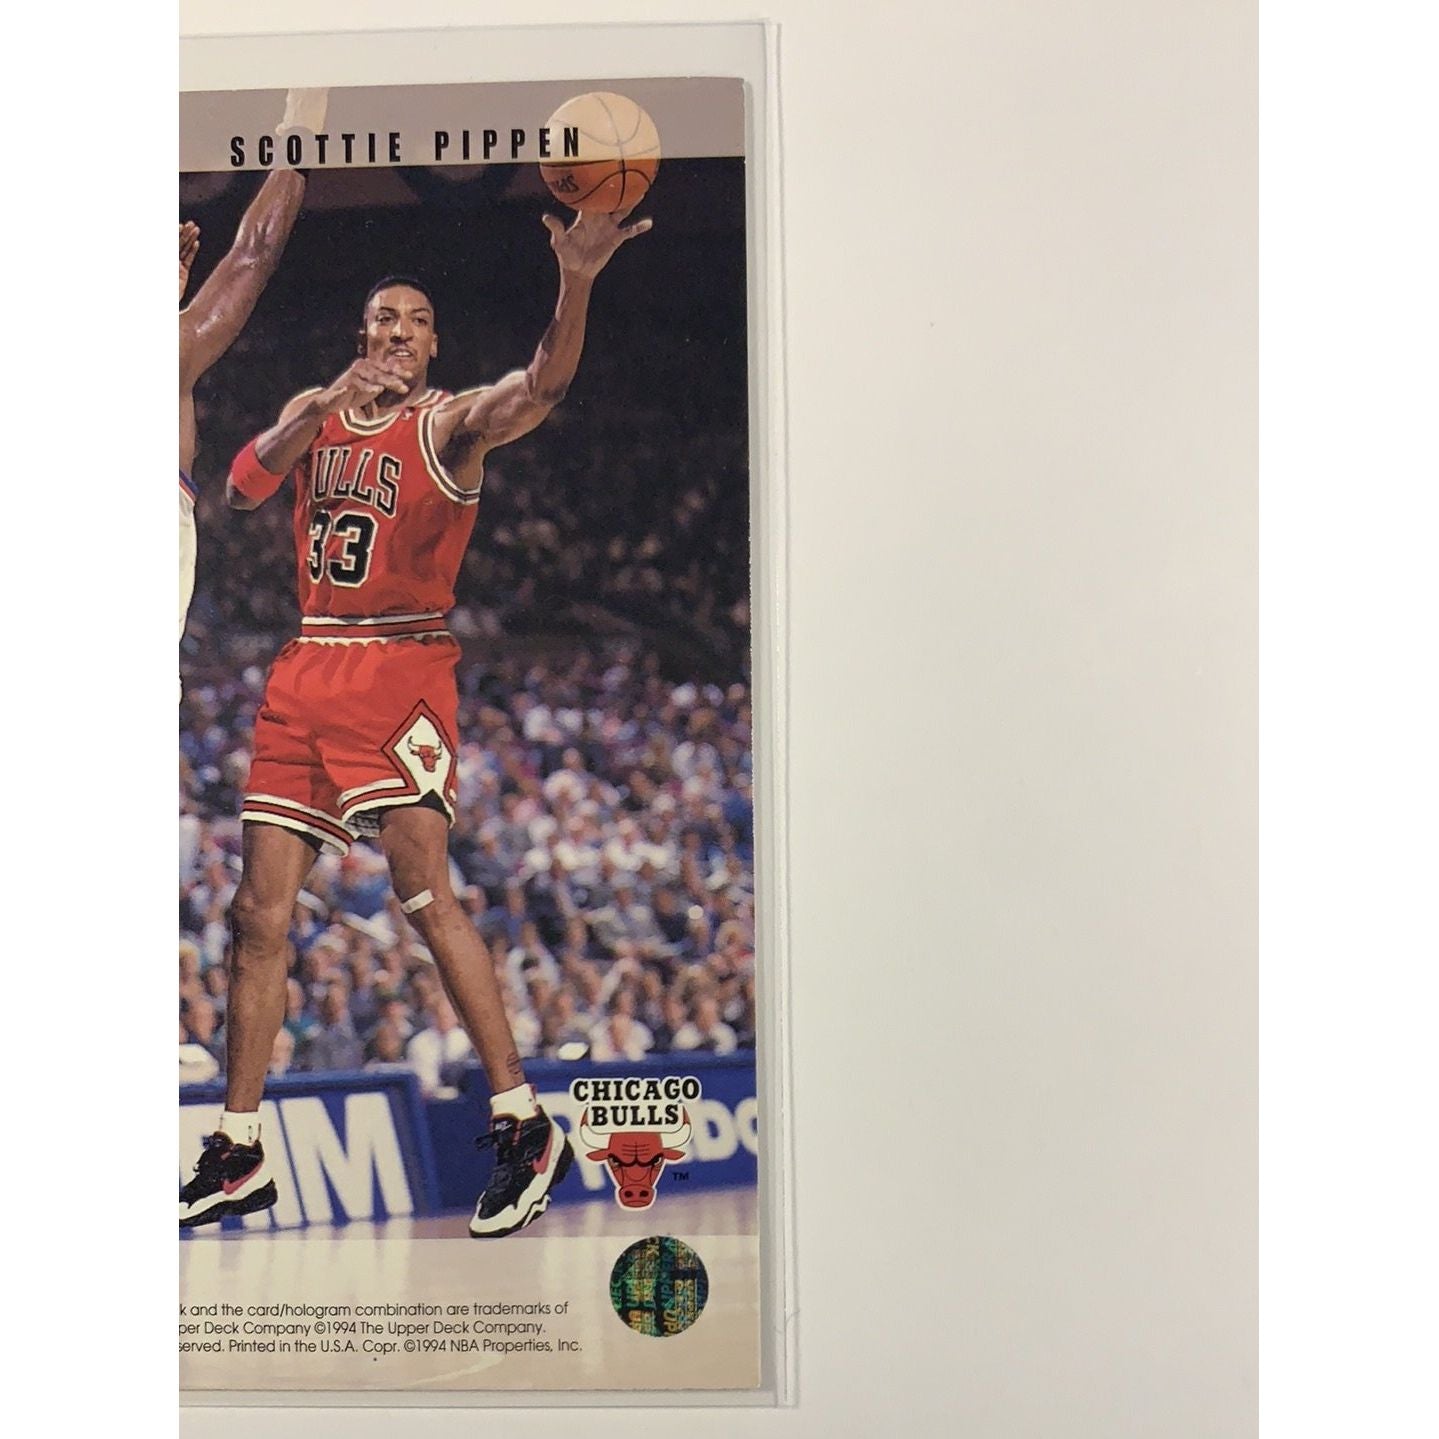  1994-95 Upper Deck Scottie Pippen Base #127  Local Legends Cards & Collectibles